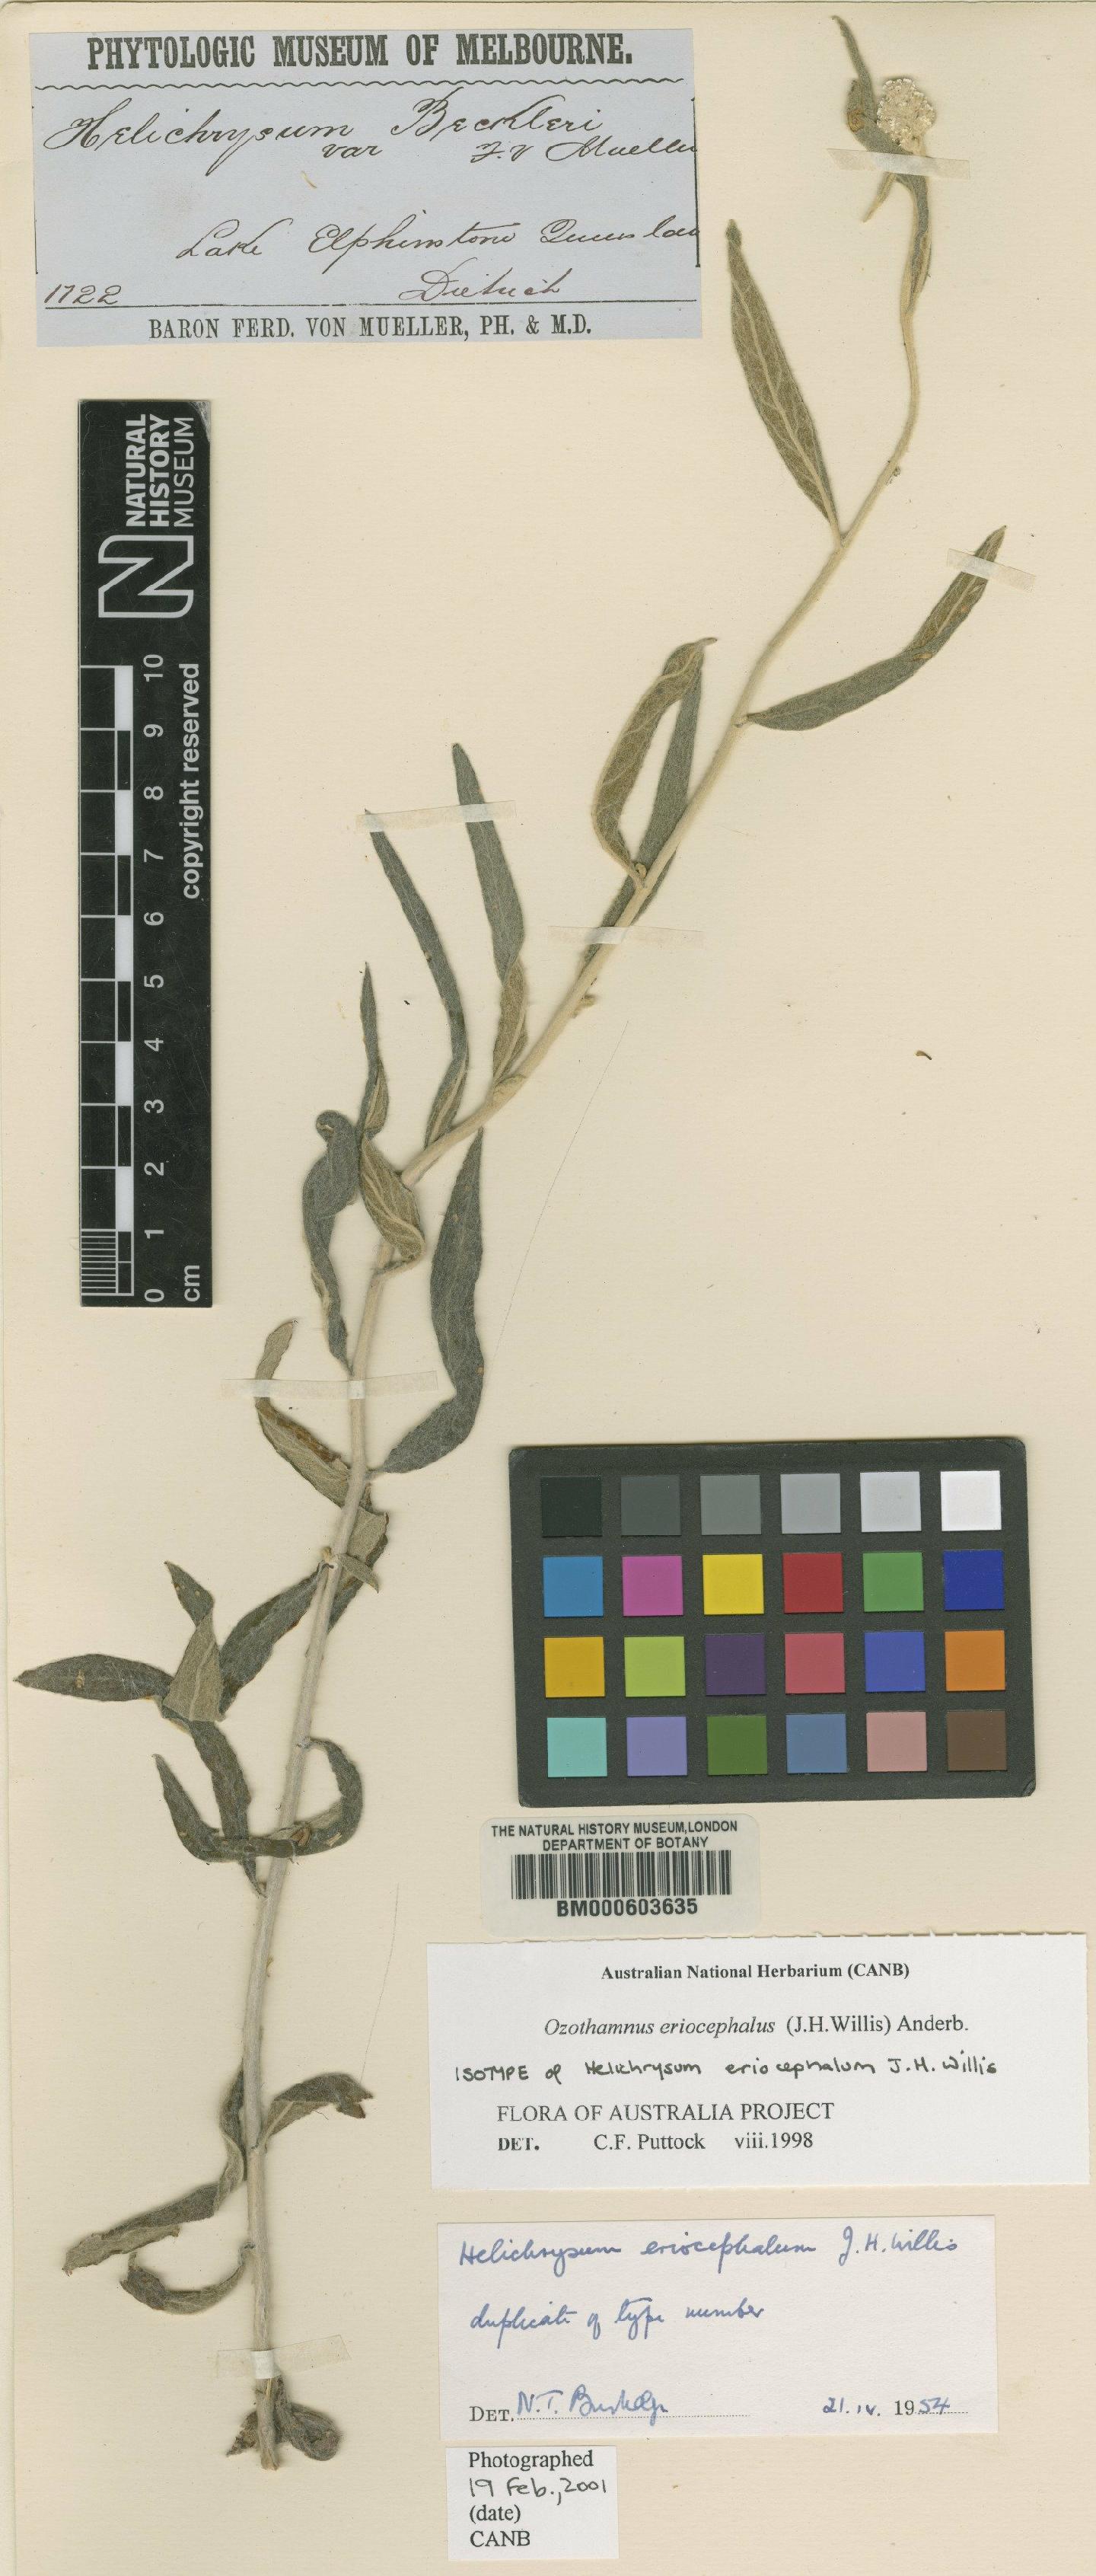 To NHMUK collection (Helichrysum eriocephalum Willis; Isotype; NHMUK:ecatalogue:4983383)